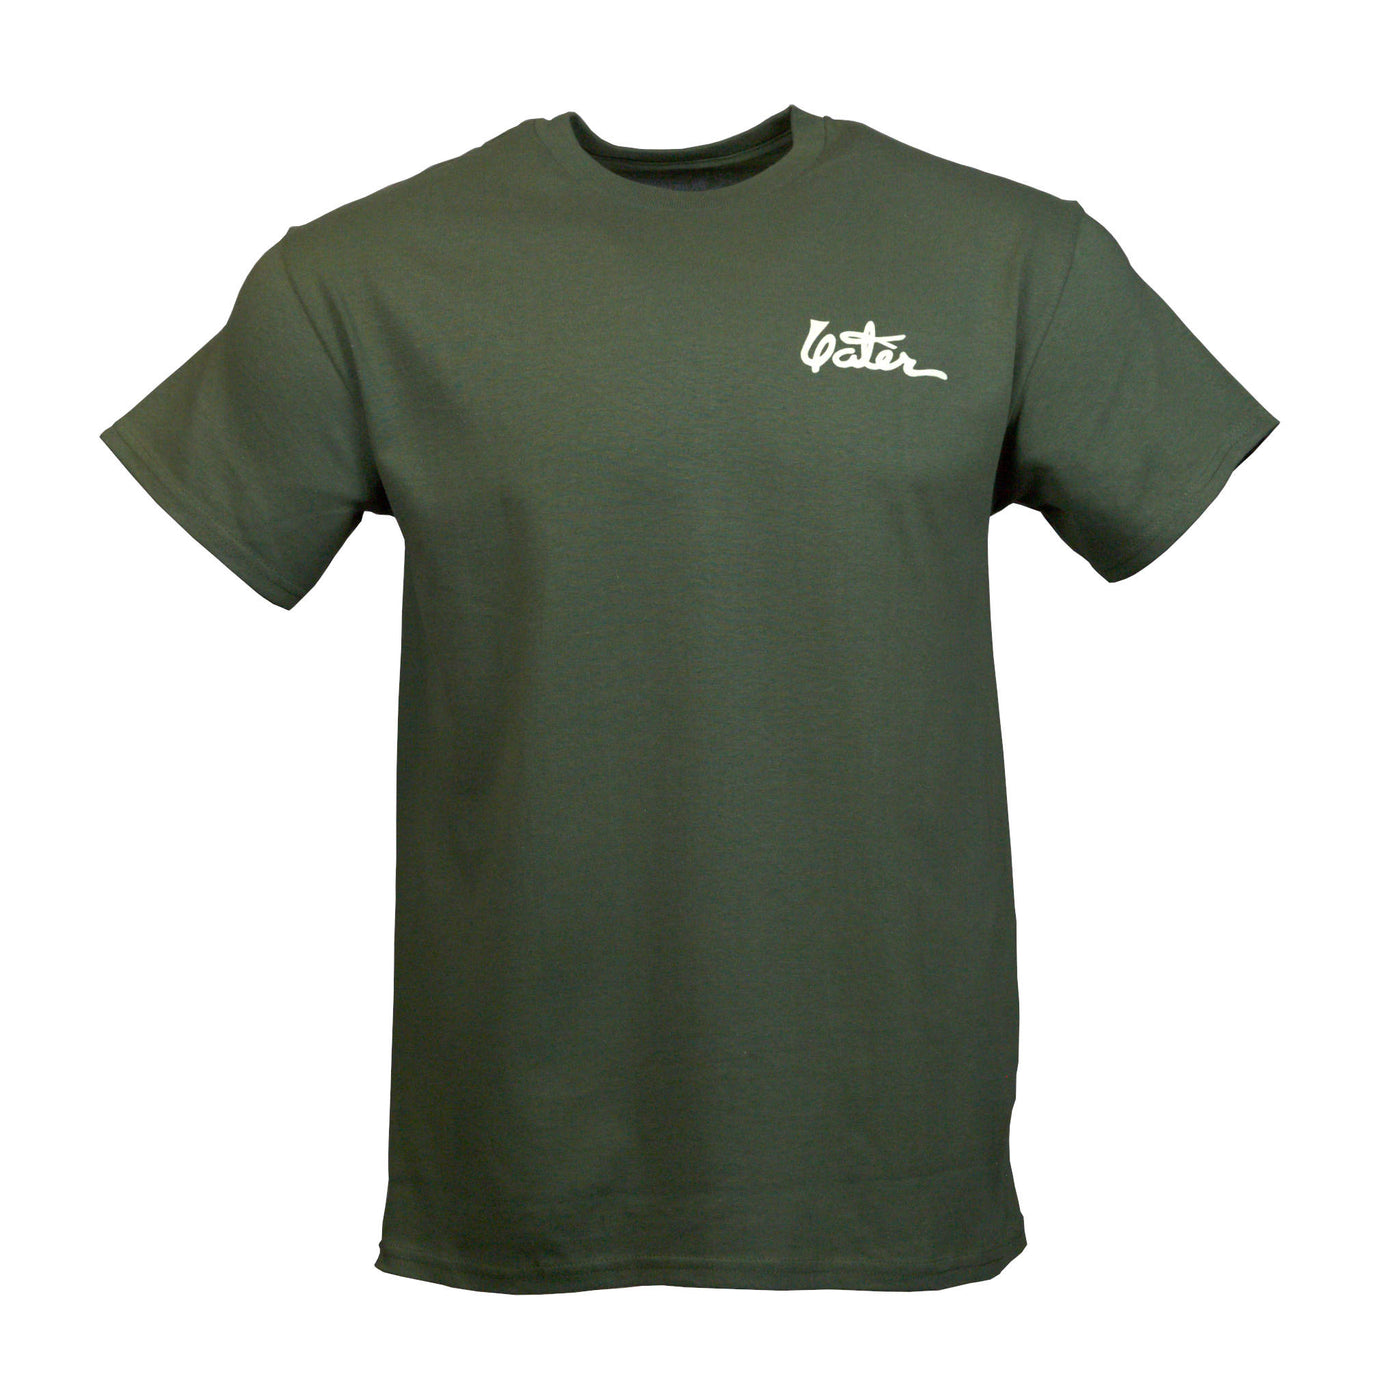 Yater Surfboards Apocalypse Now "C.D.S" Short Sleeve T-Shirt